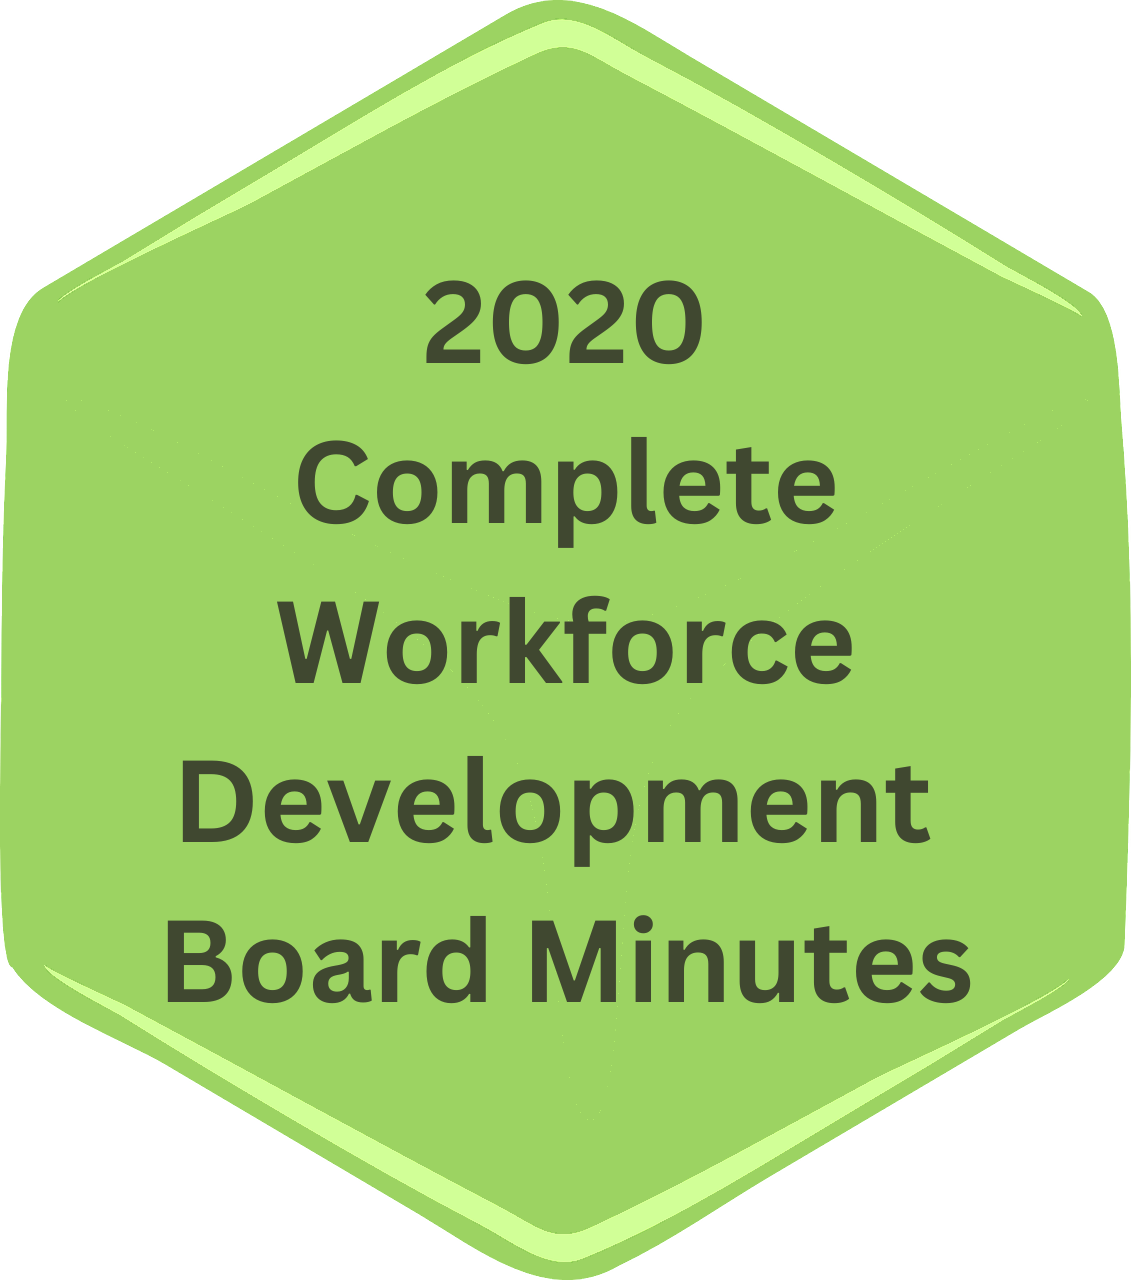 workforce development board meeting minutes complete 2020